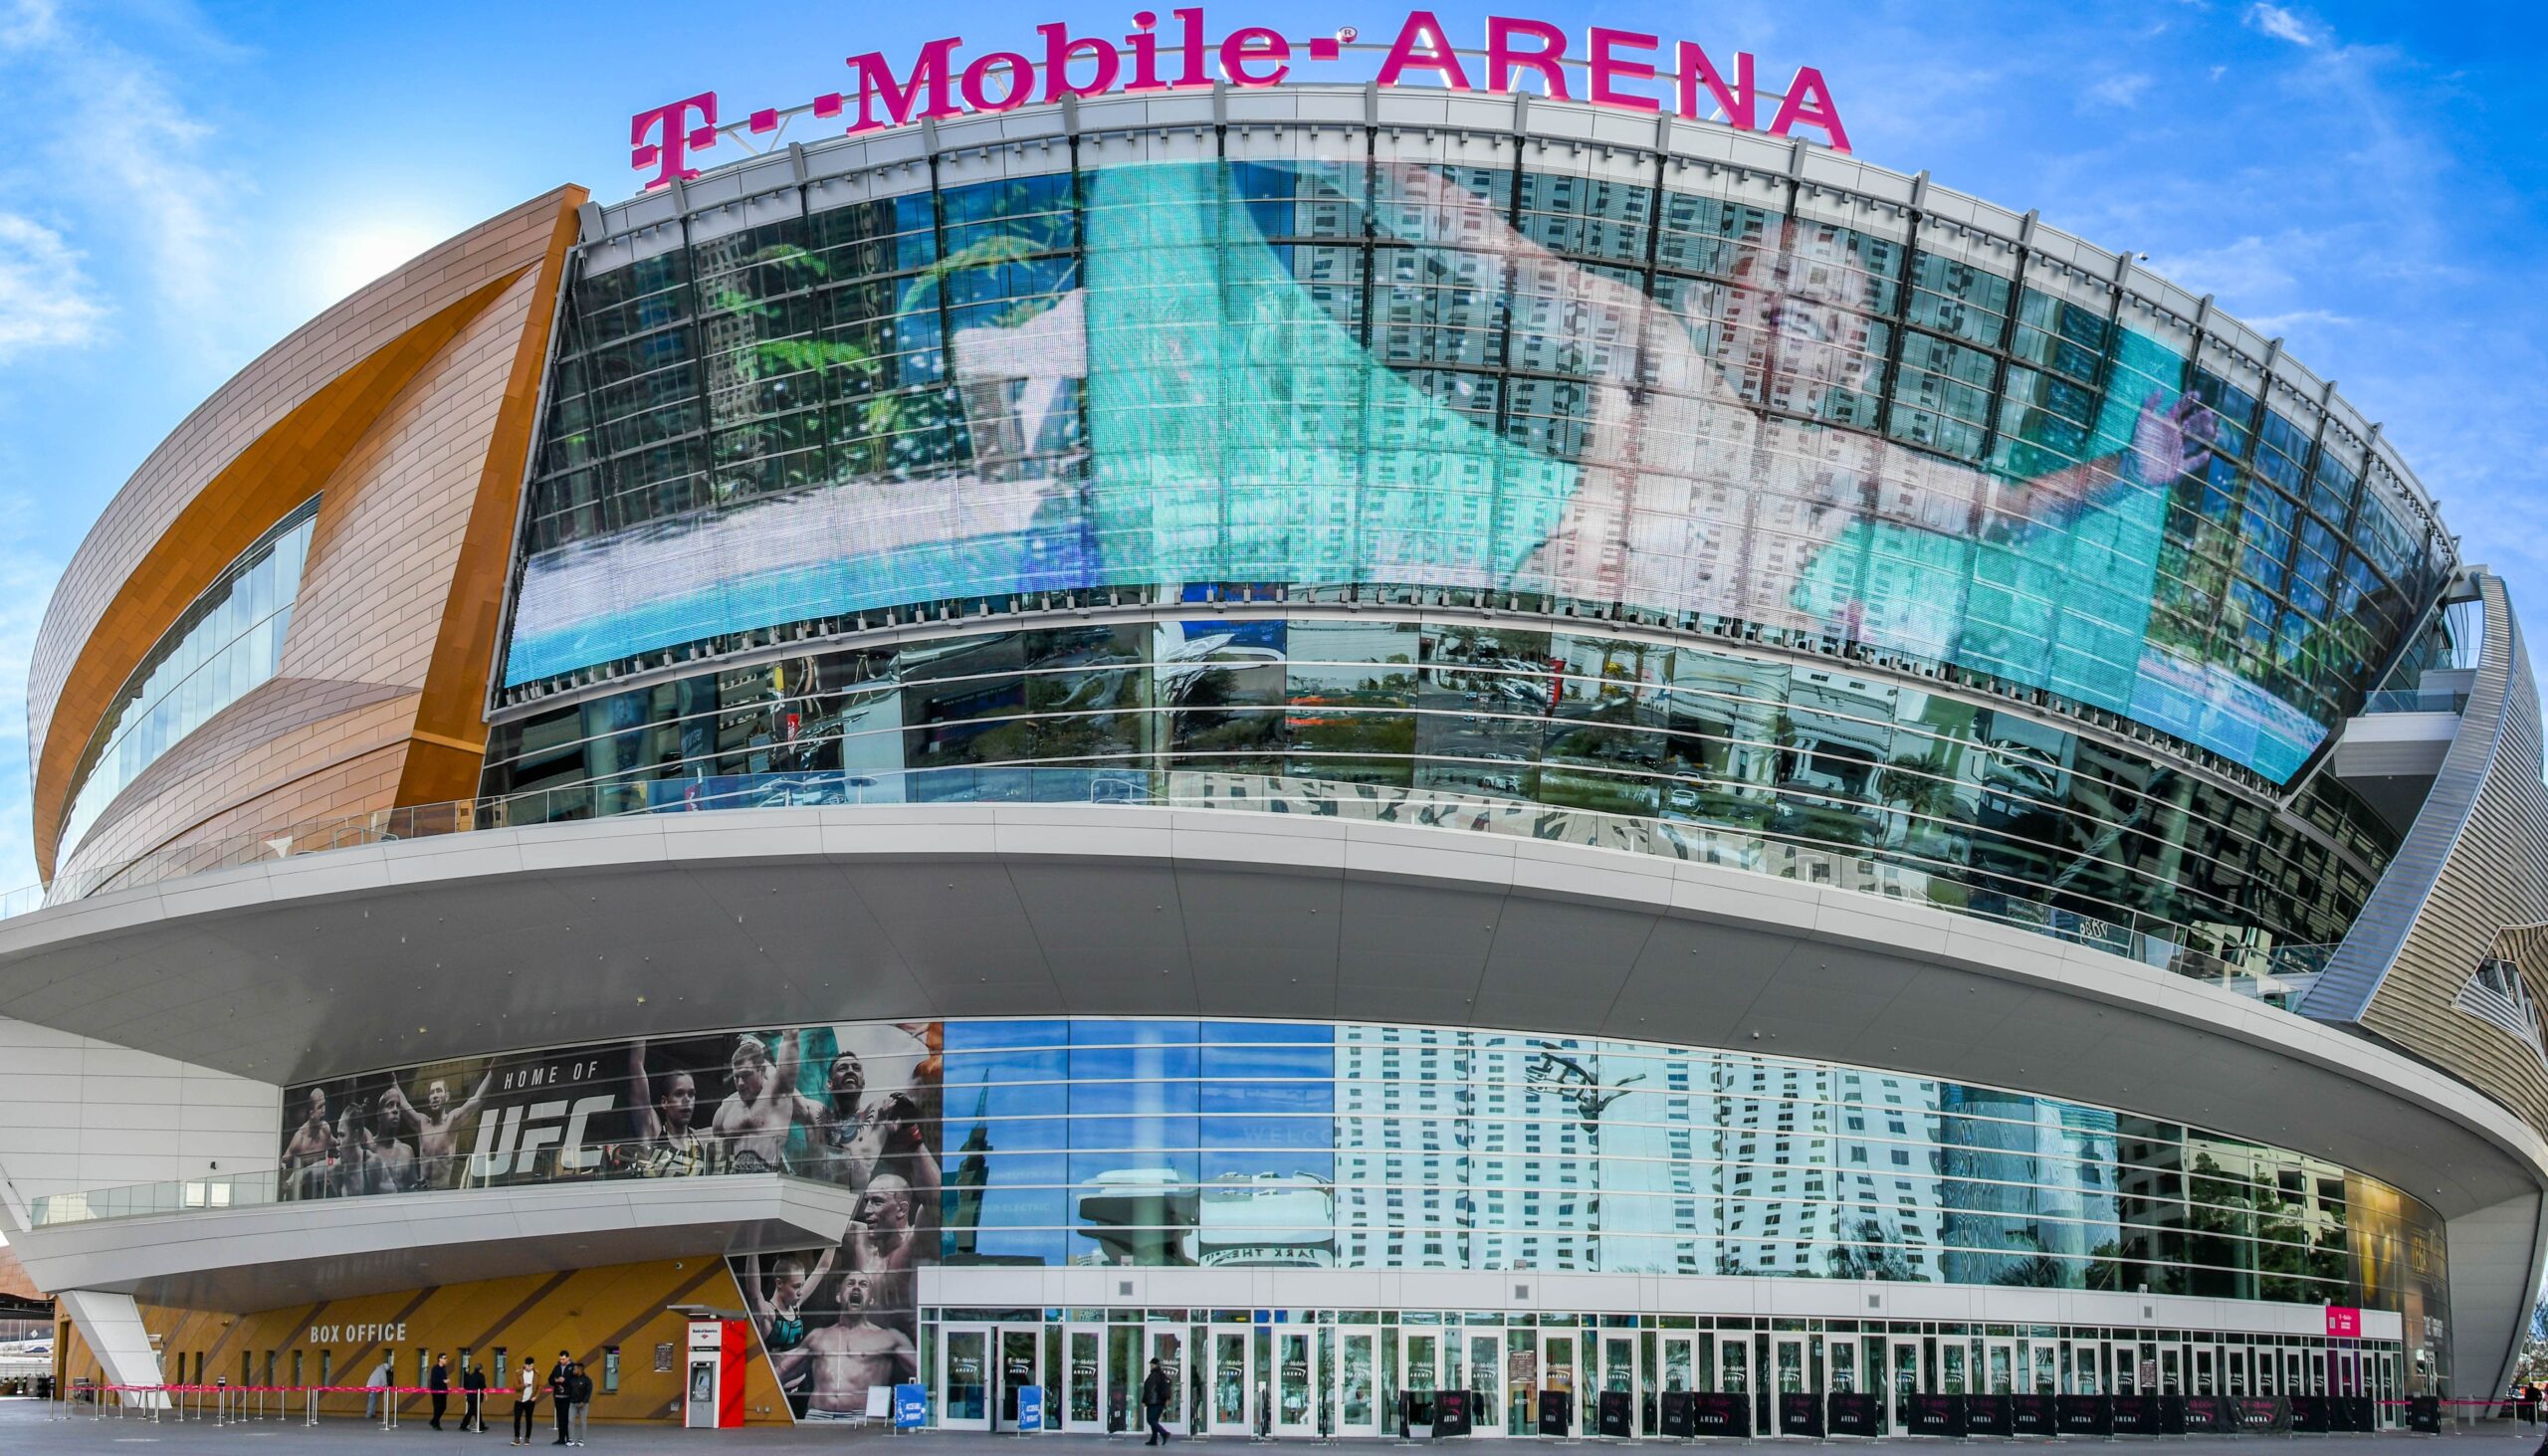 T-mobile arena in Las Vegas